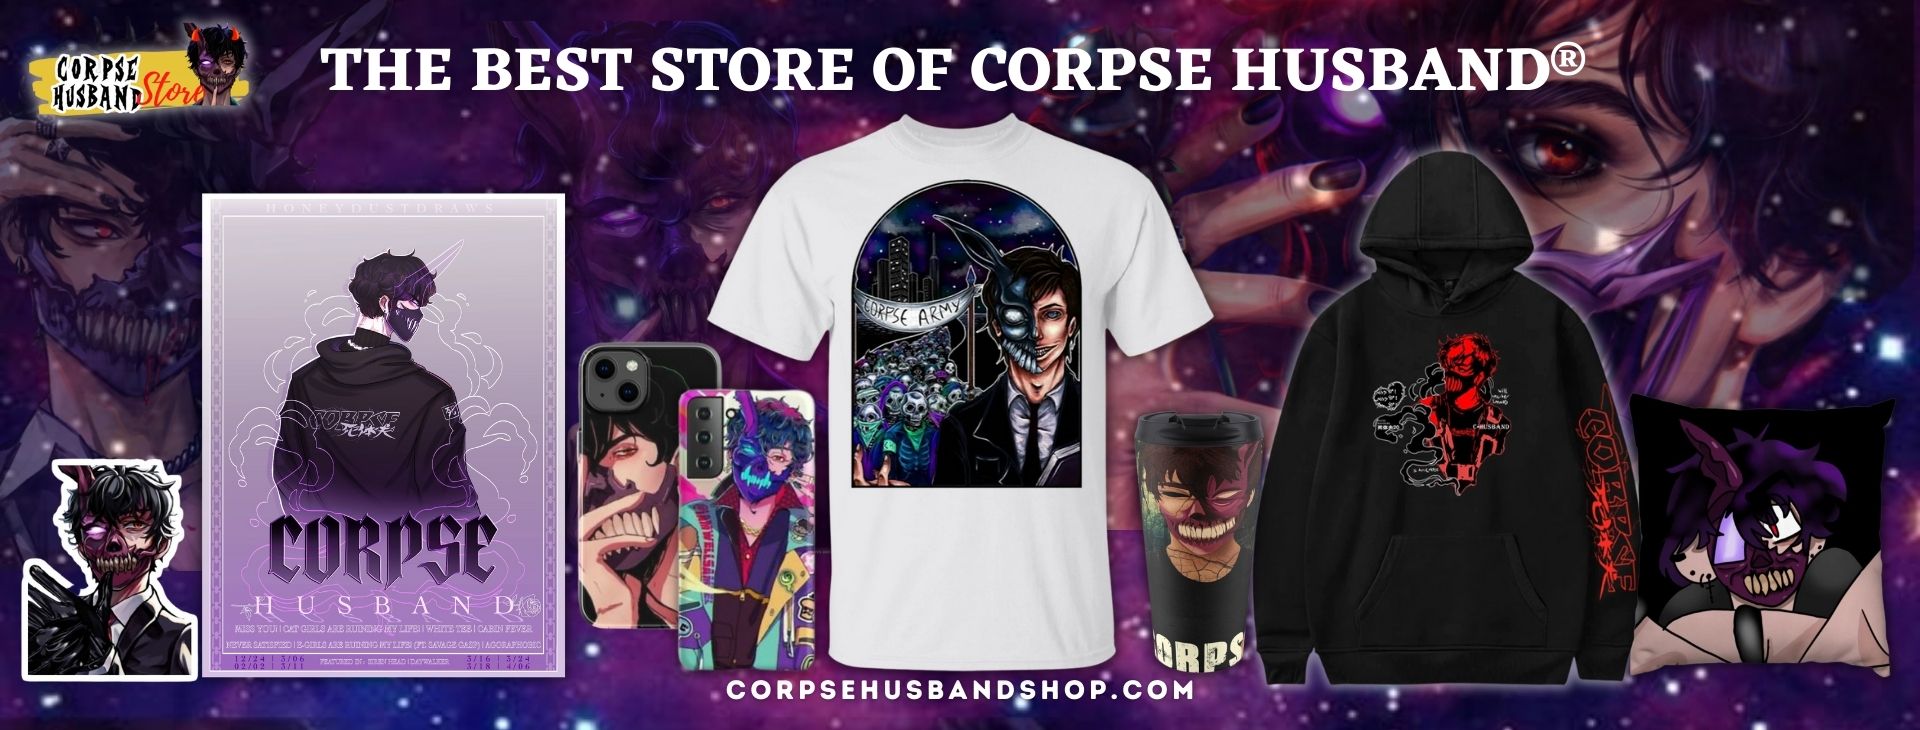 Corpse Husband Banner - Corpse Husband Shop